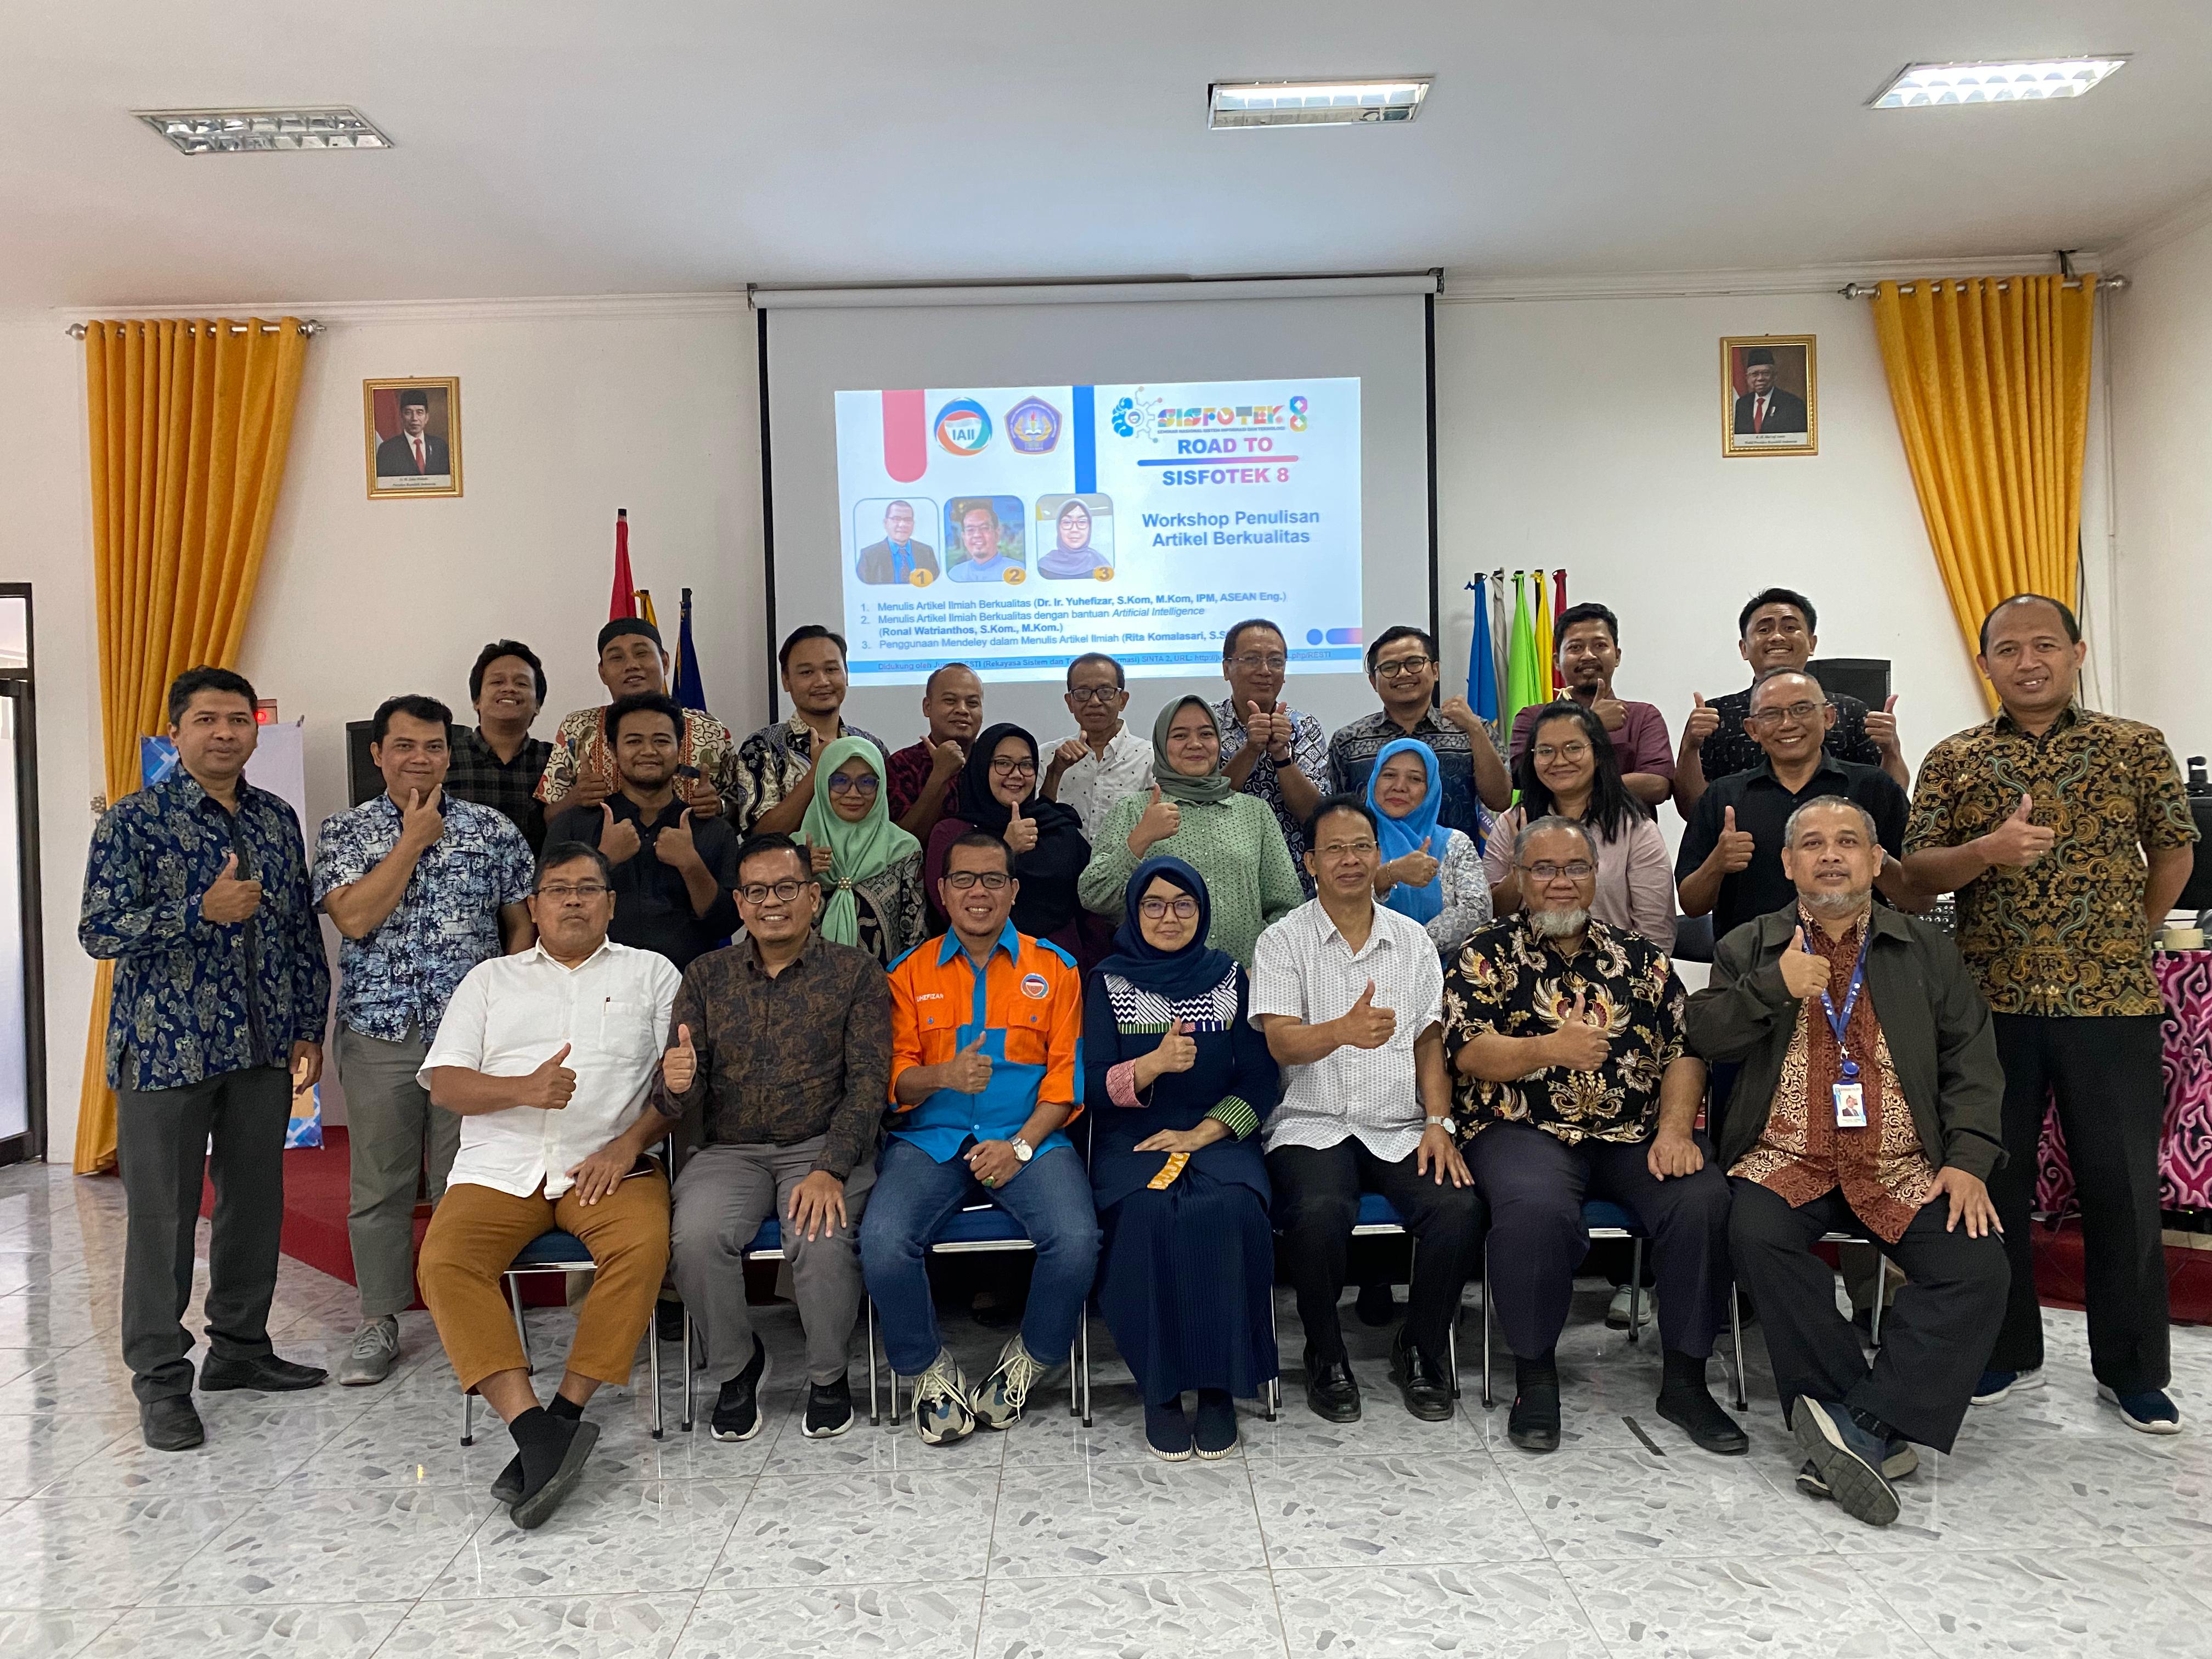 Road To Sisfotek Ke-8 dan Kongres IAII Ke-3, STMIK IKMI Cirebon Gelar Workshop Penulisan Artikel Berkualitas